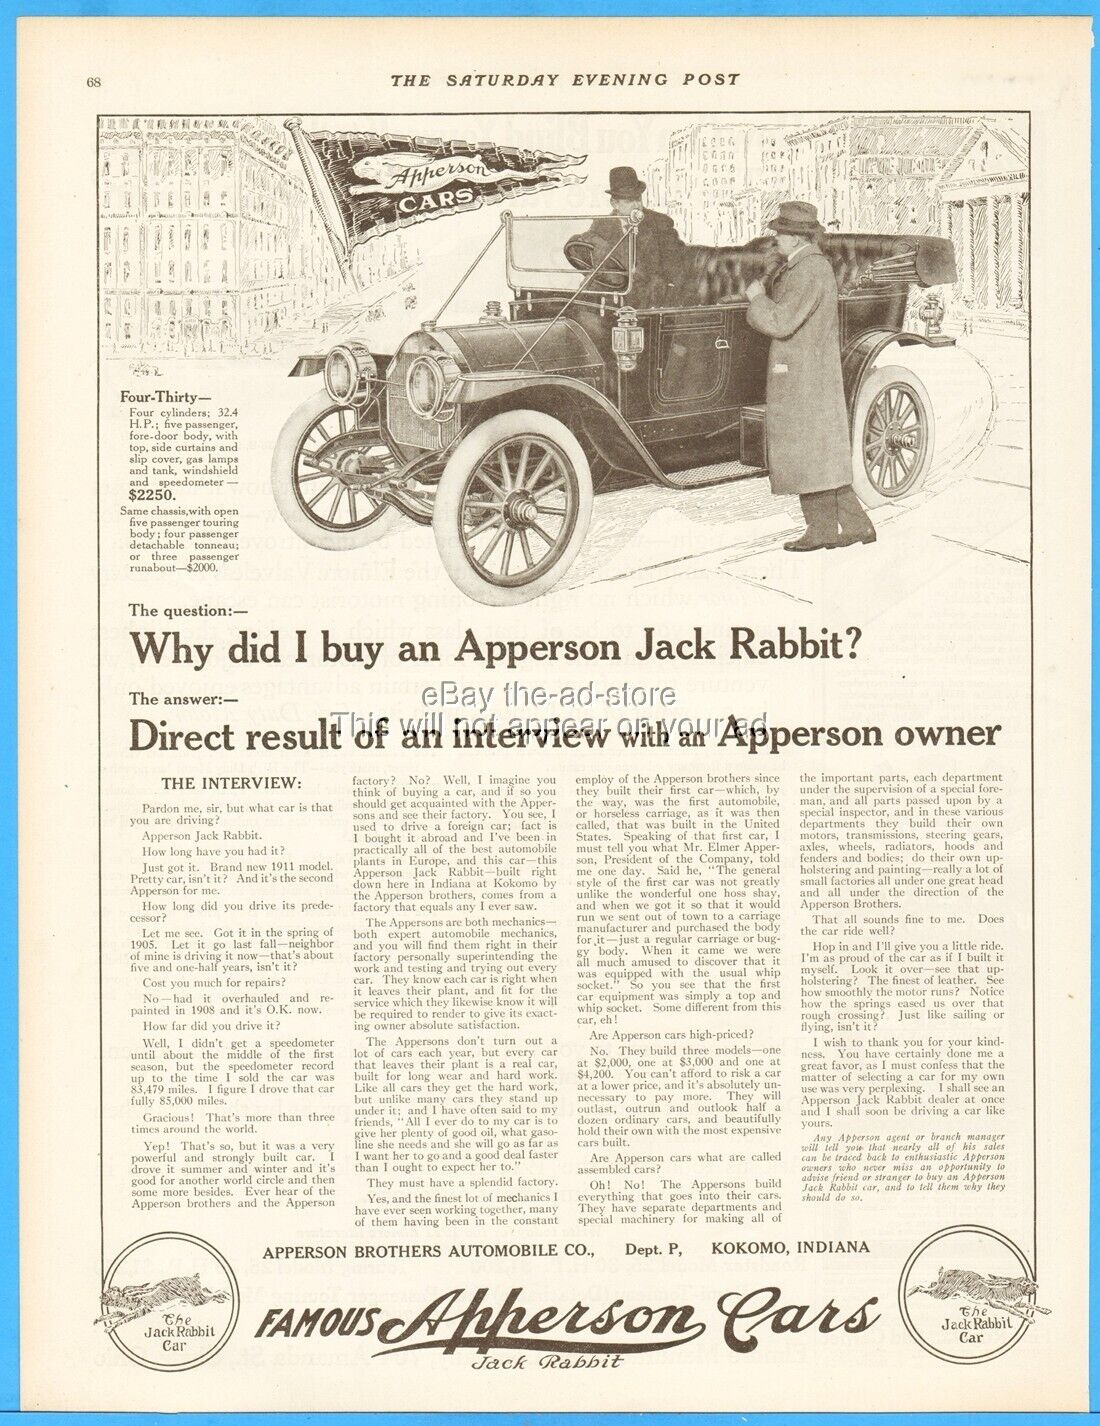 1911 Apperson Brothers Automobile Ad Jack Rabbit 4-30 Kokomo IN Antique Car Ad